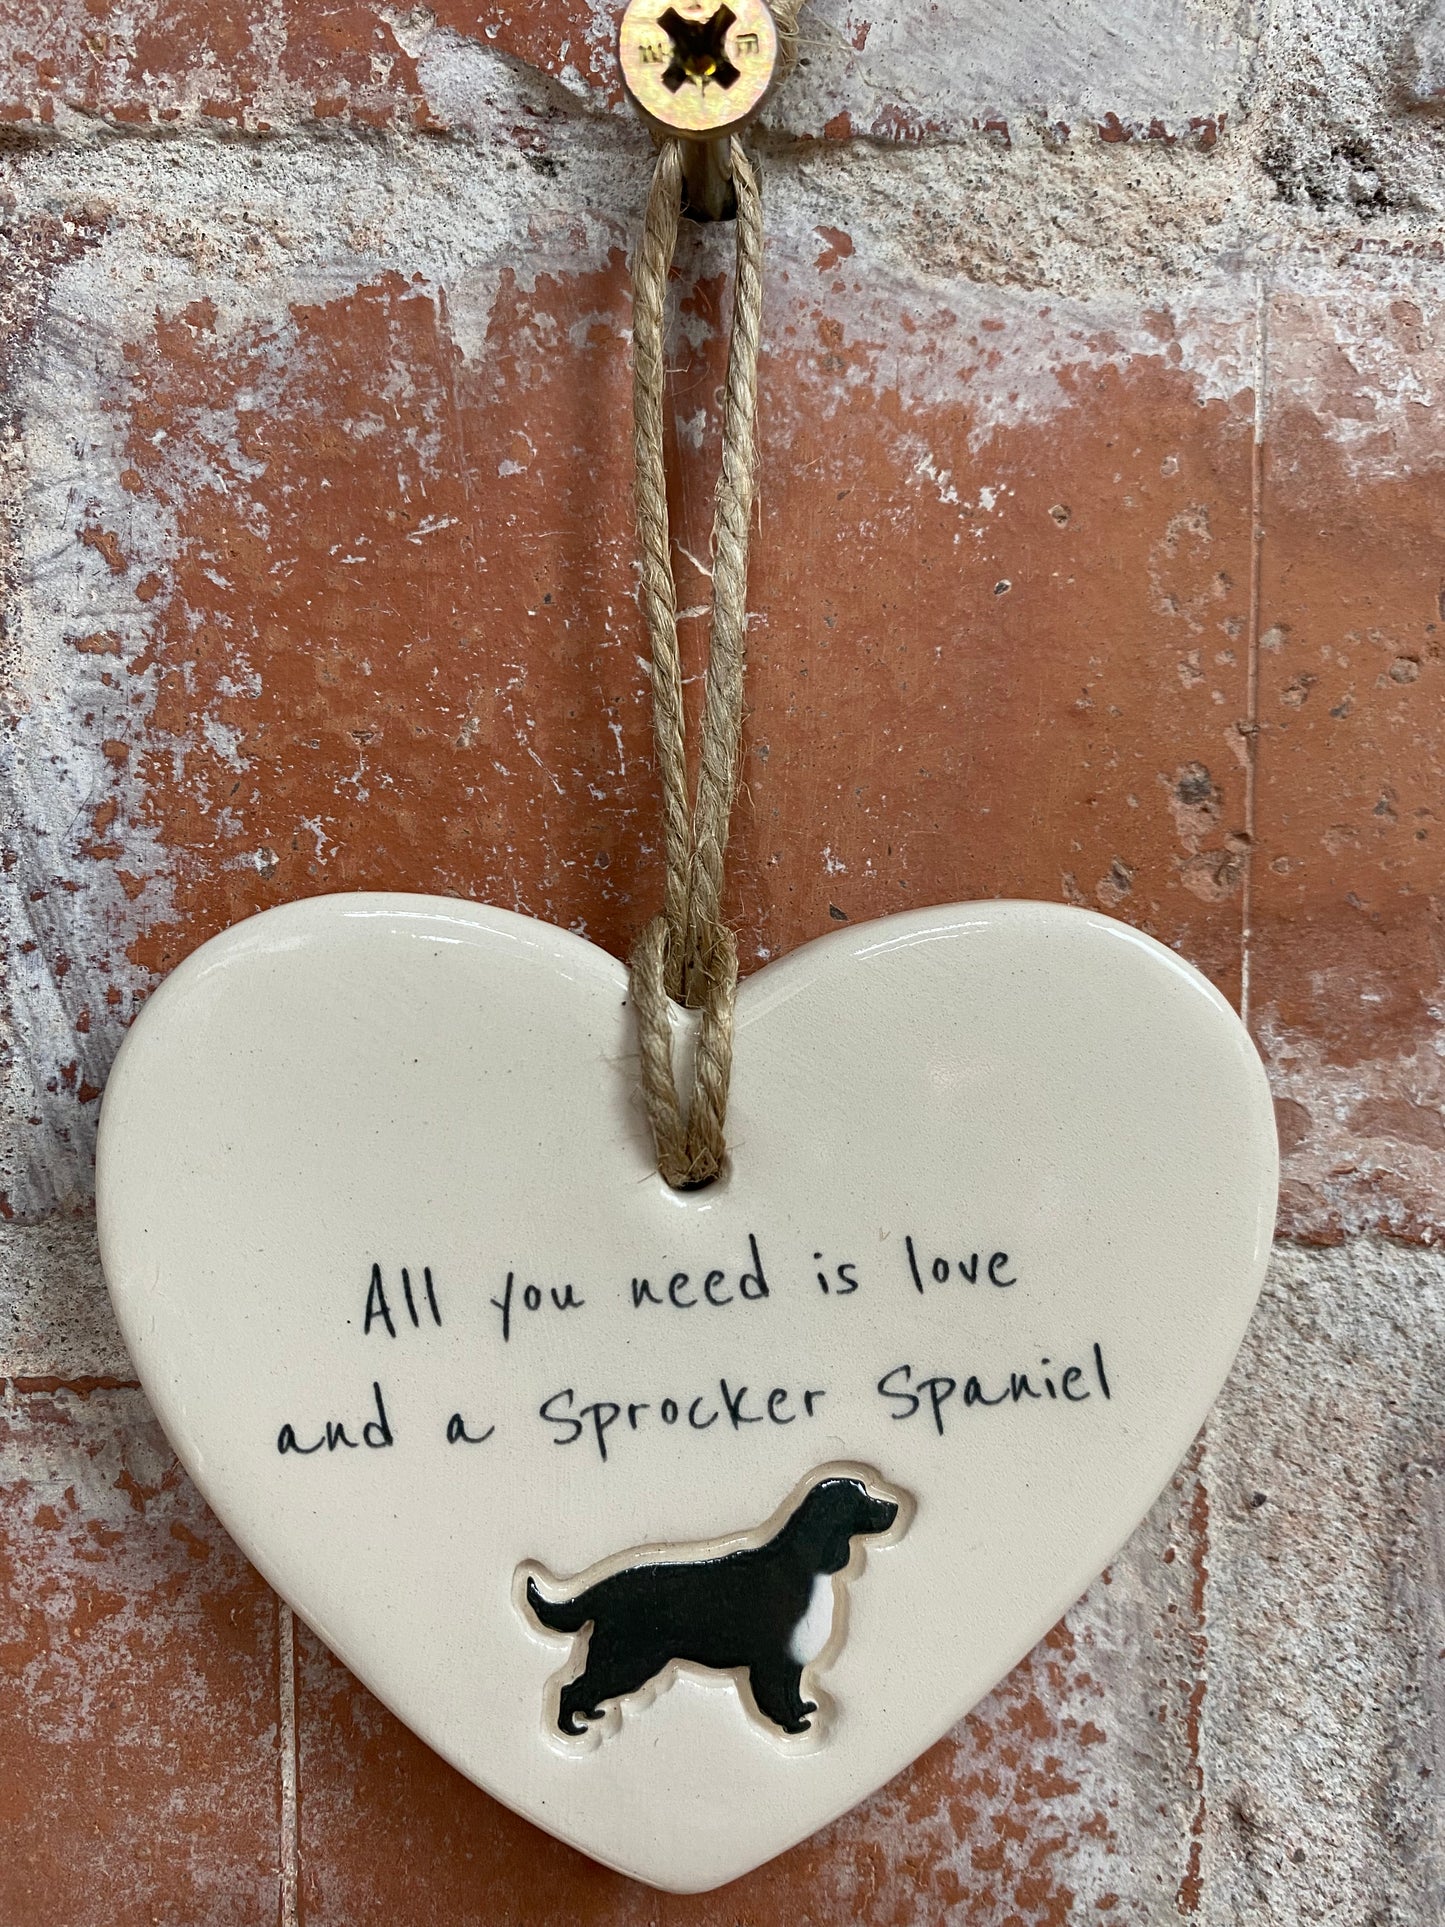 Sprocker Spaniel ceramic heart